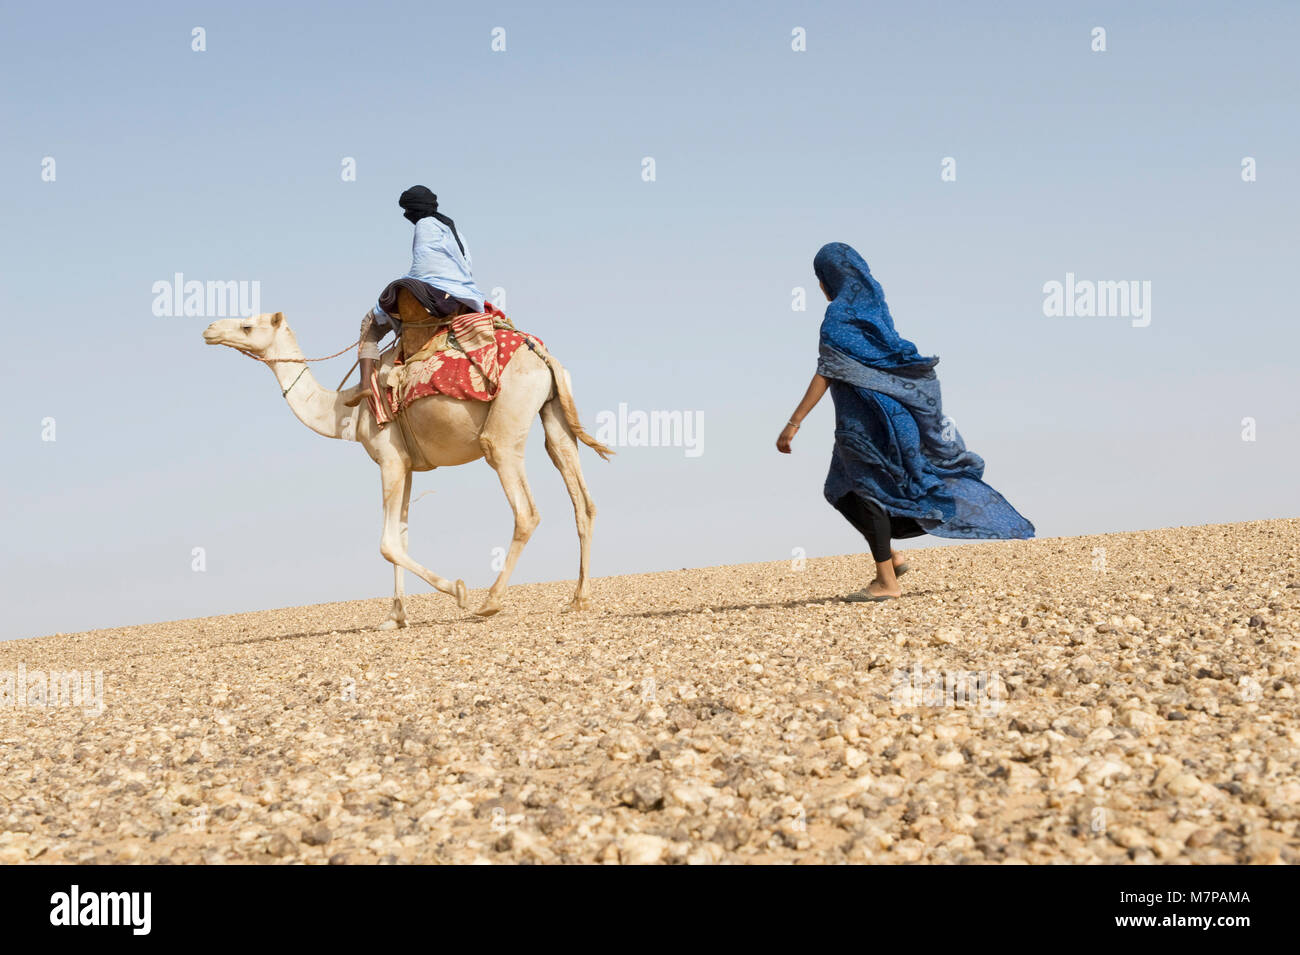 Woman walking behind a man riding on a camel in Mauritania,Western Sahara Desert. Stock Photo